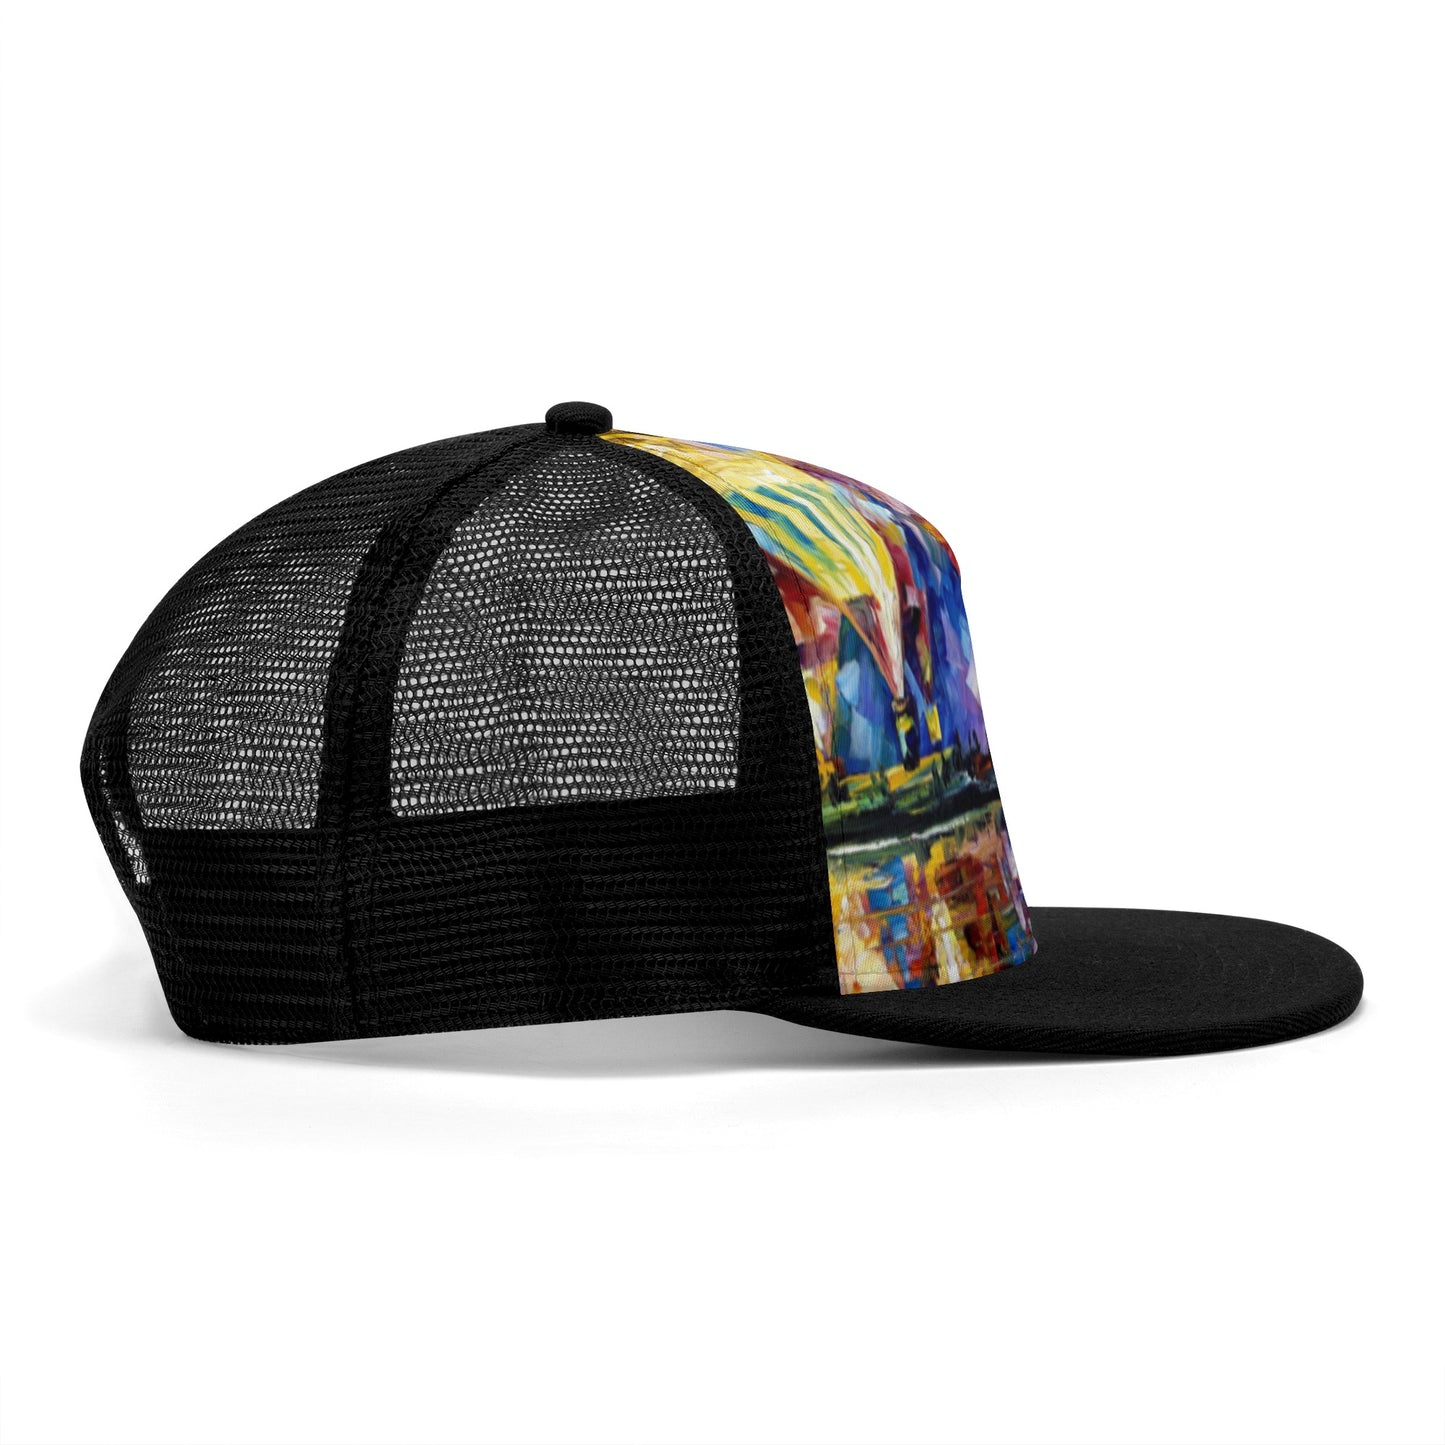 Front Printing Mesh Hip-hop Hats @FanClub By AFREMOV.COM